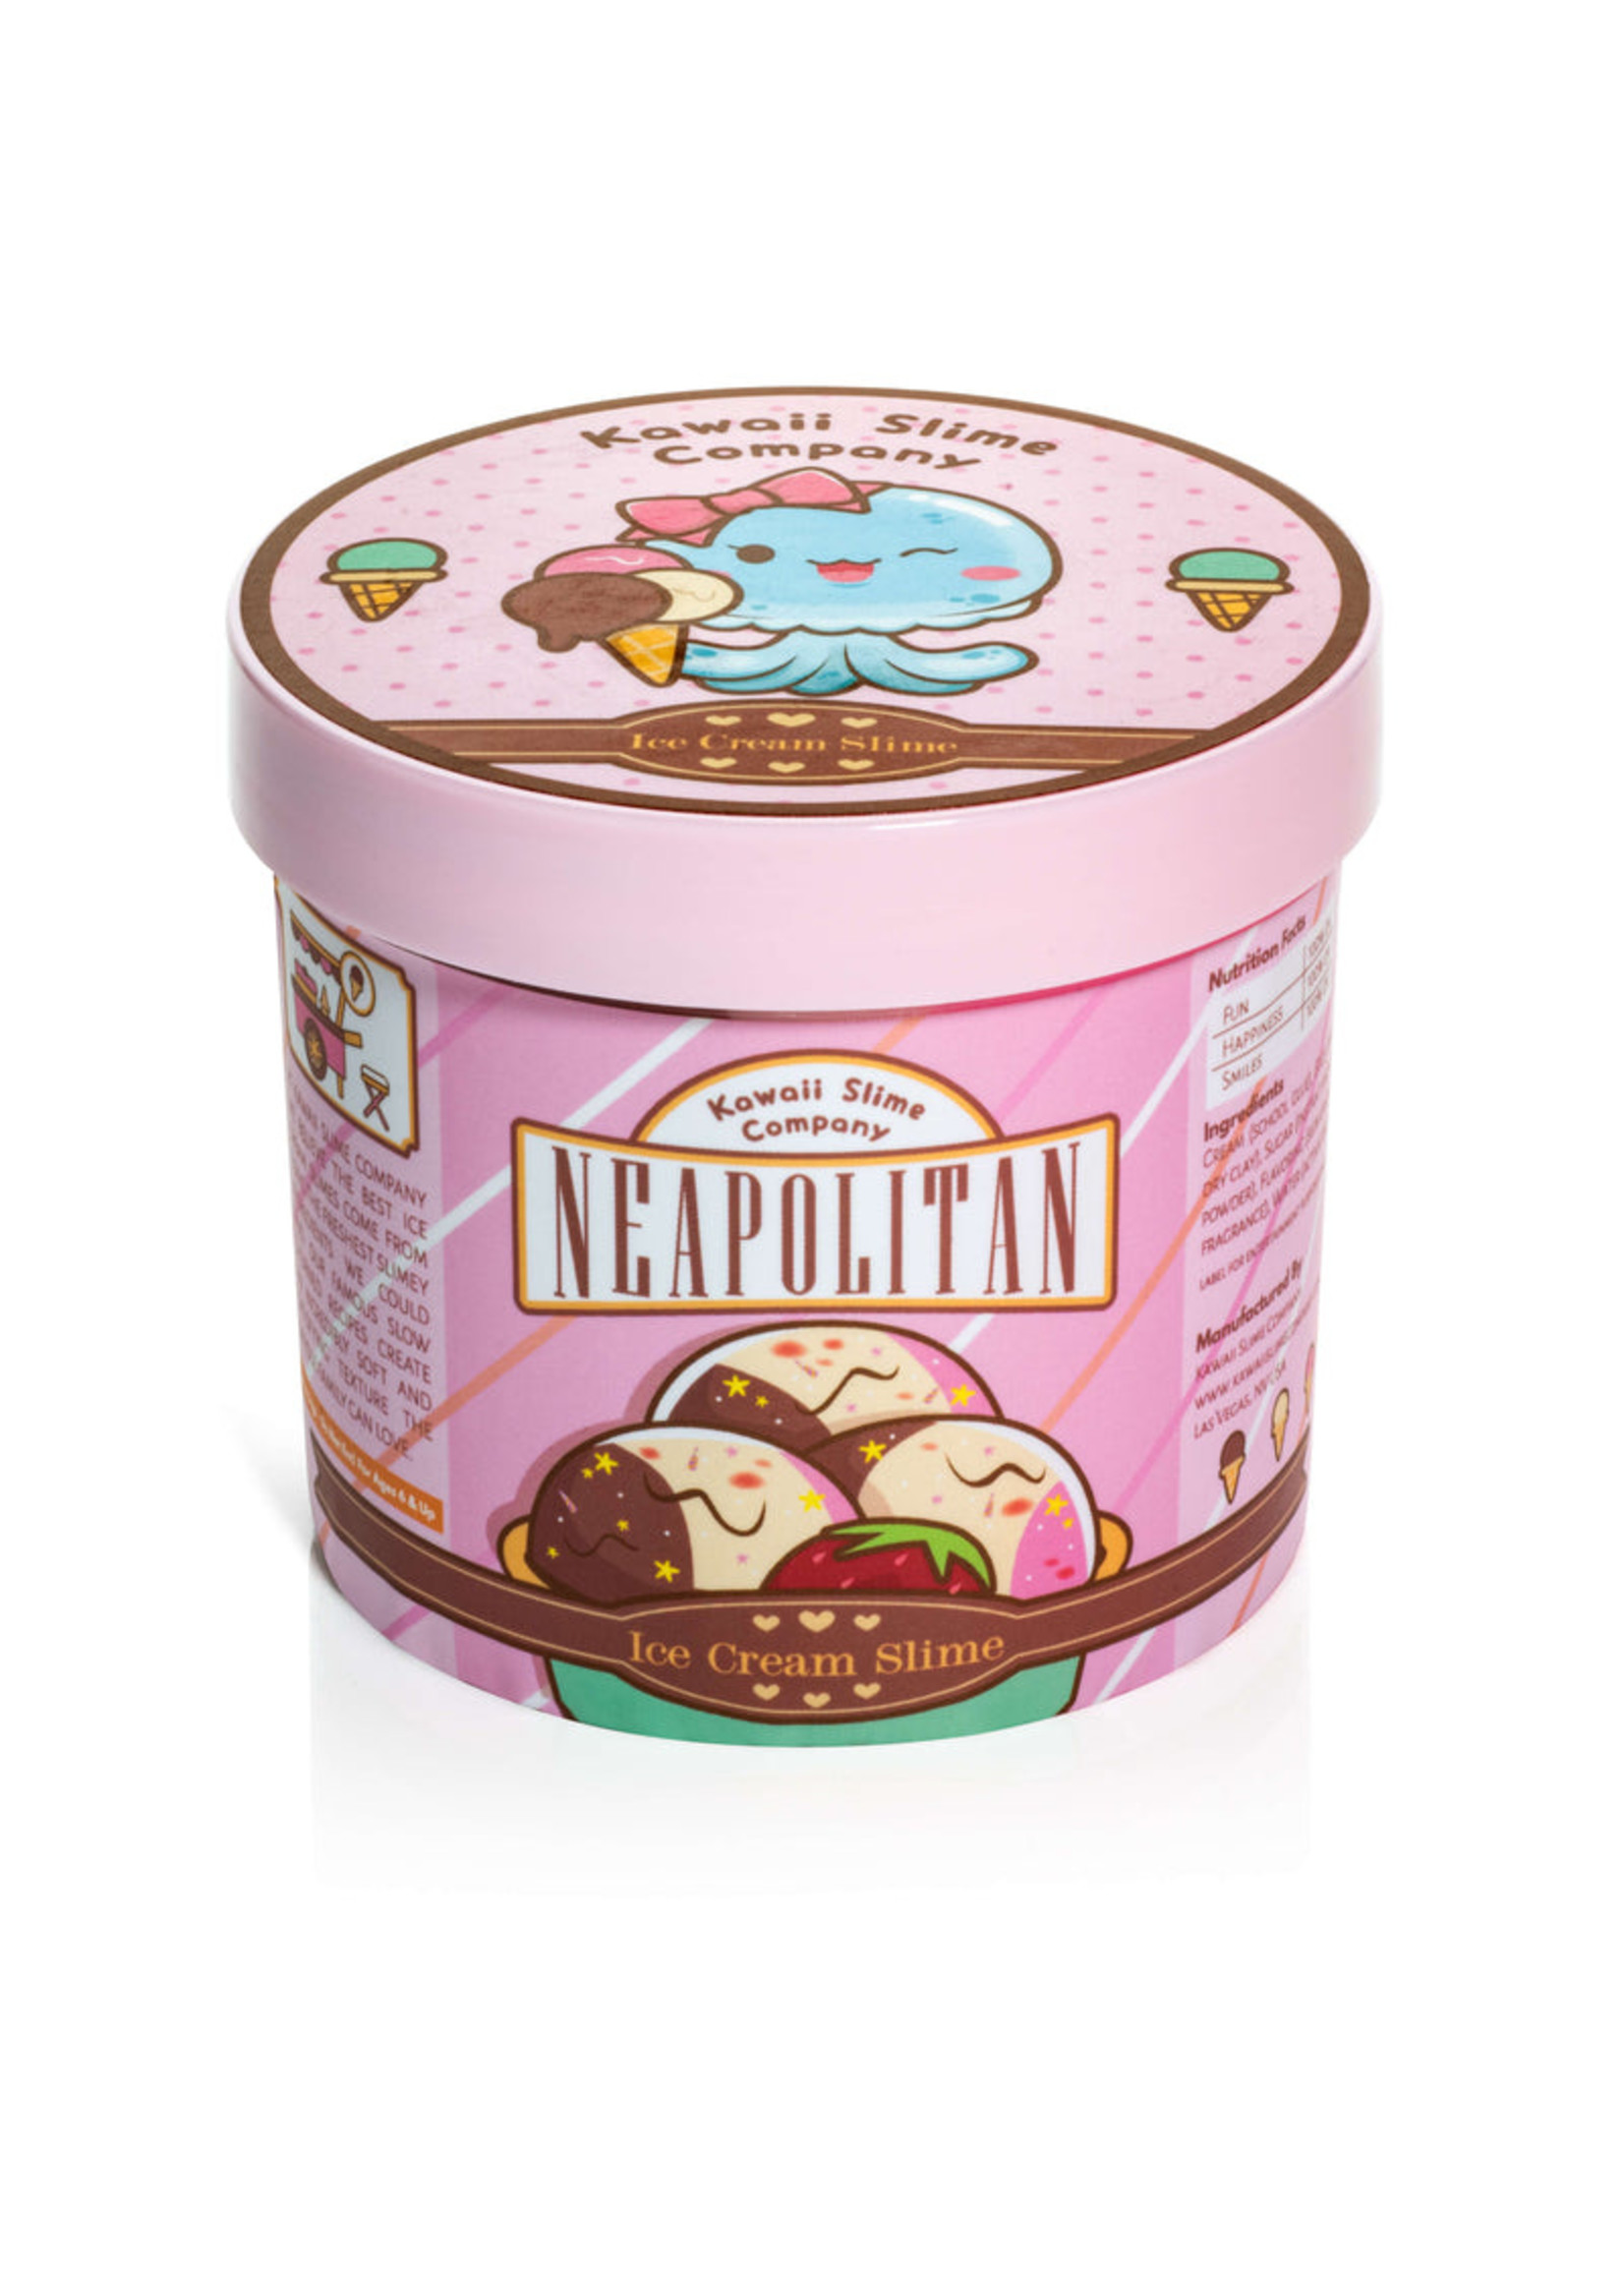 Kawaii Company "Neapolitan" Ice Cream Slime